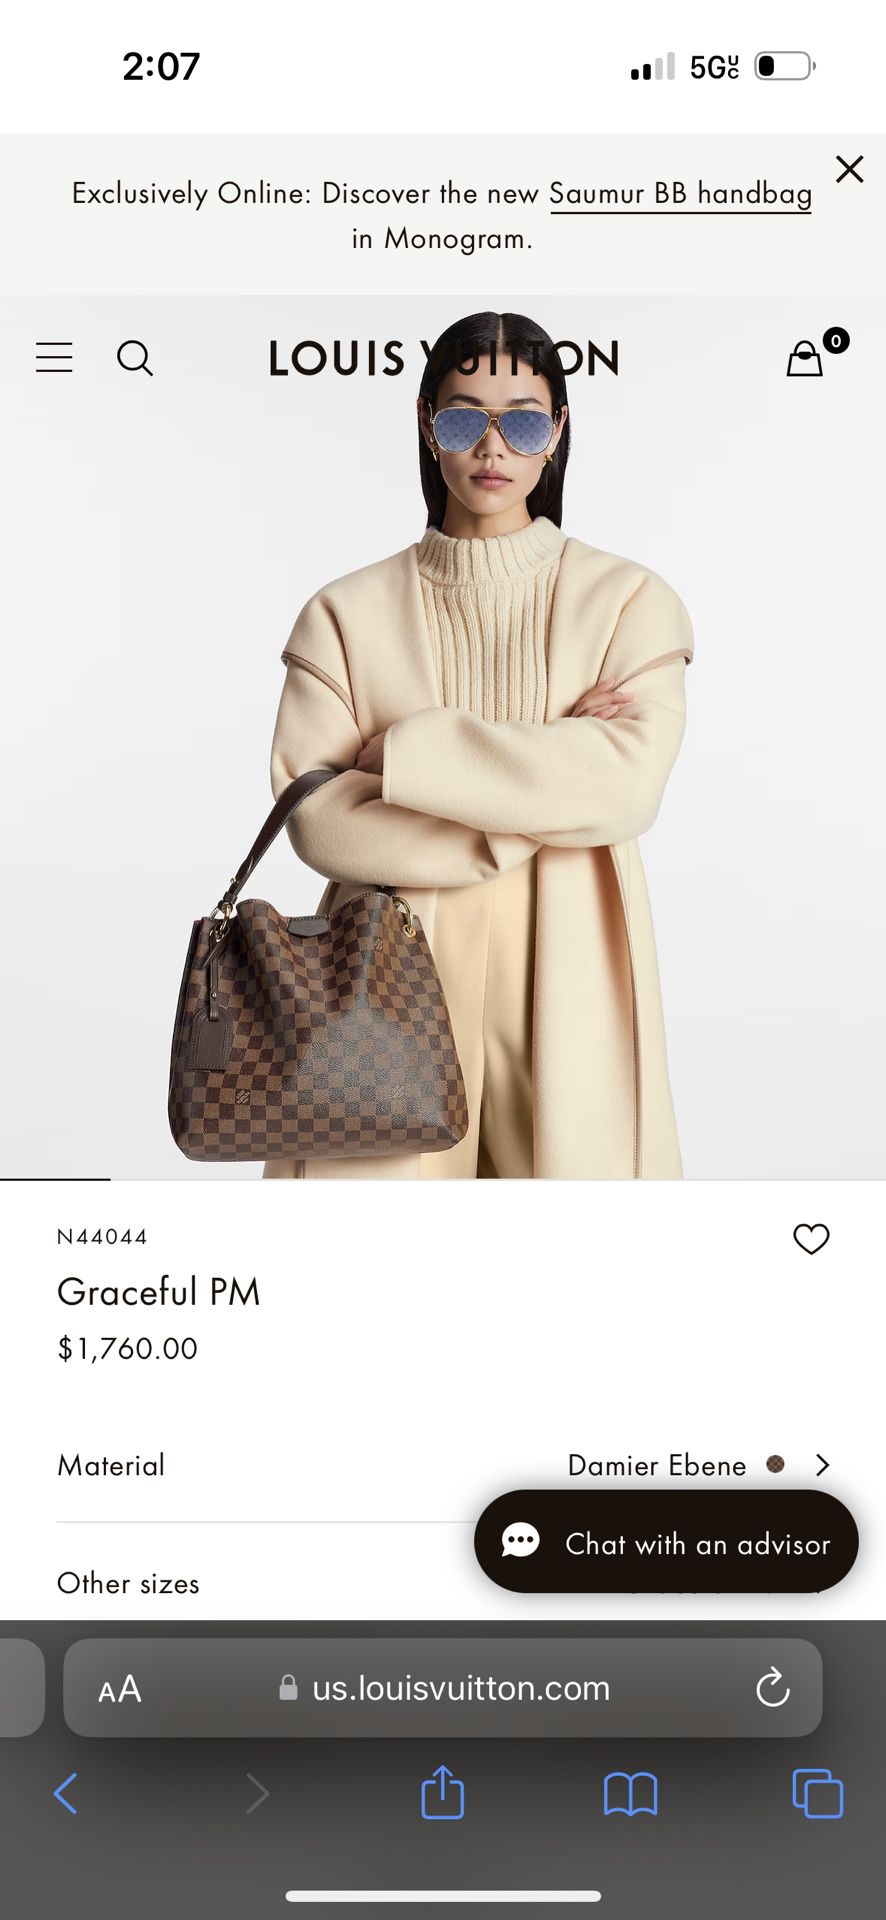 Louis Vuitton Graceful PM ORIGINAL for Sale in Ontario, CA - OfferUp